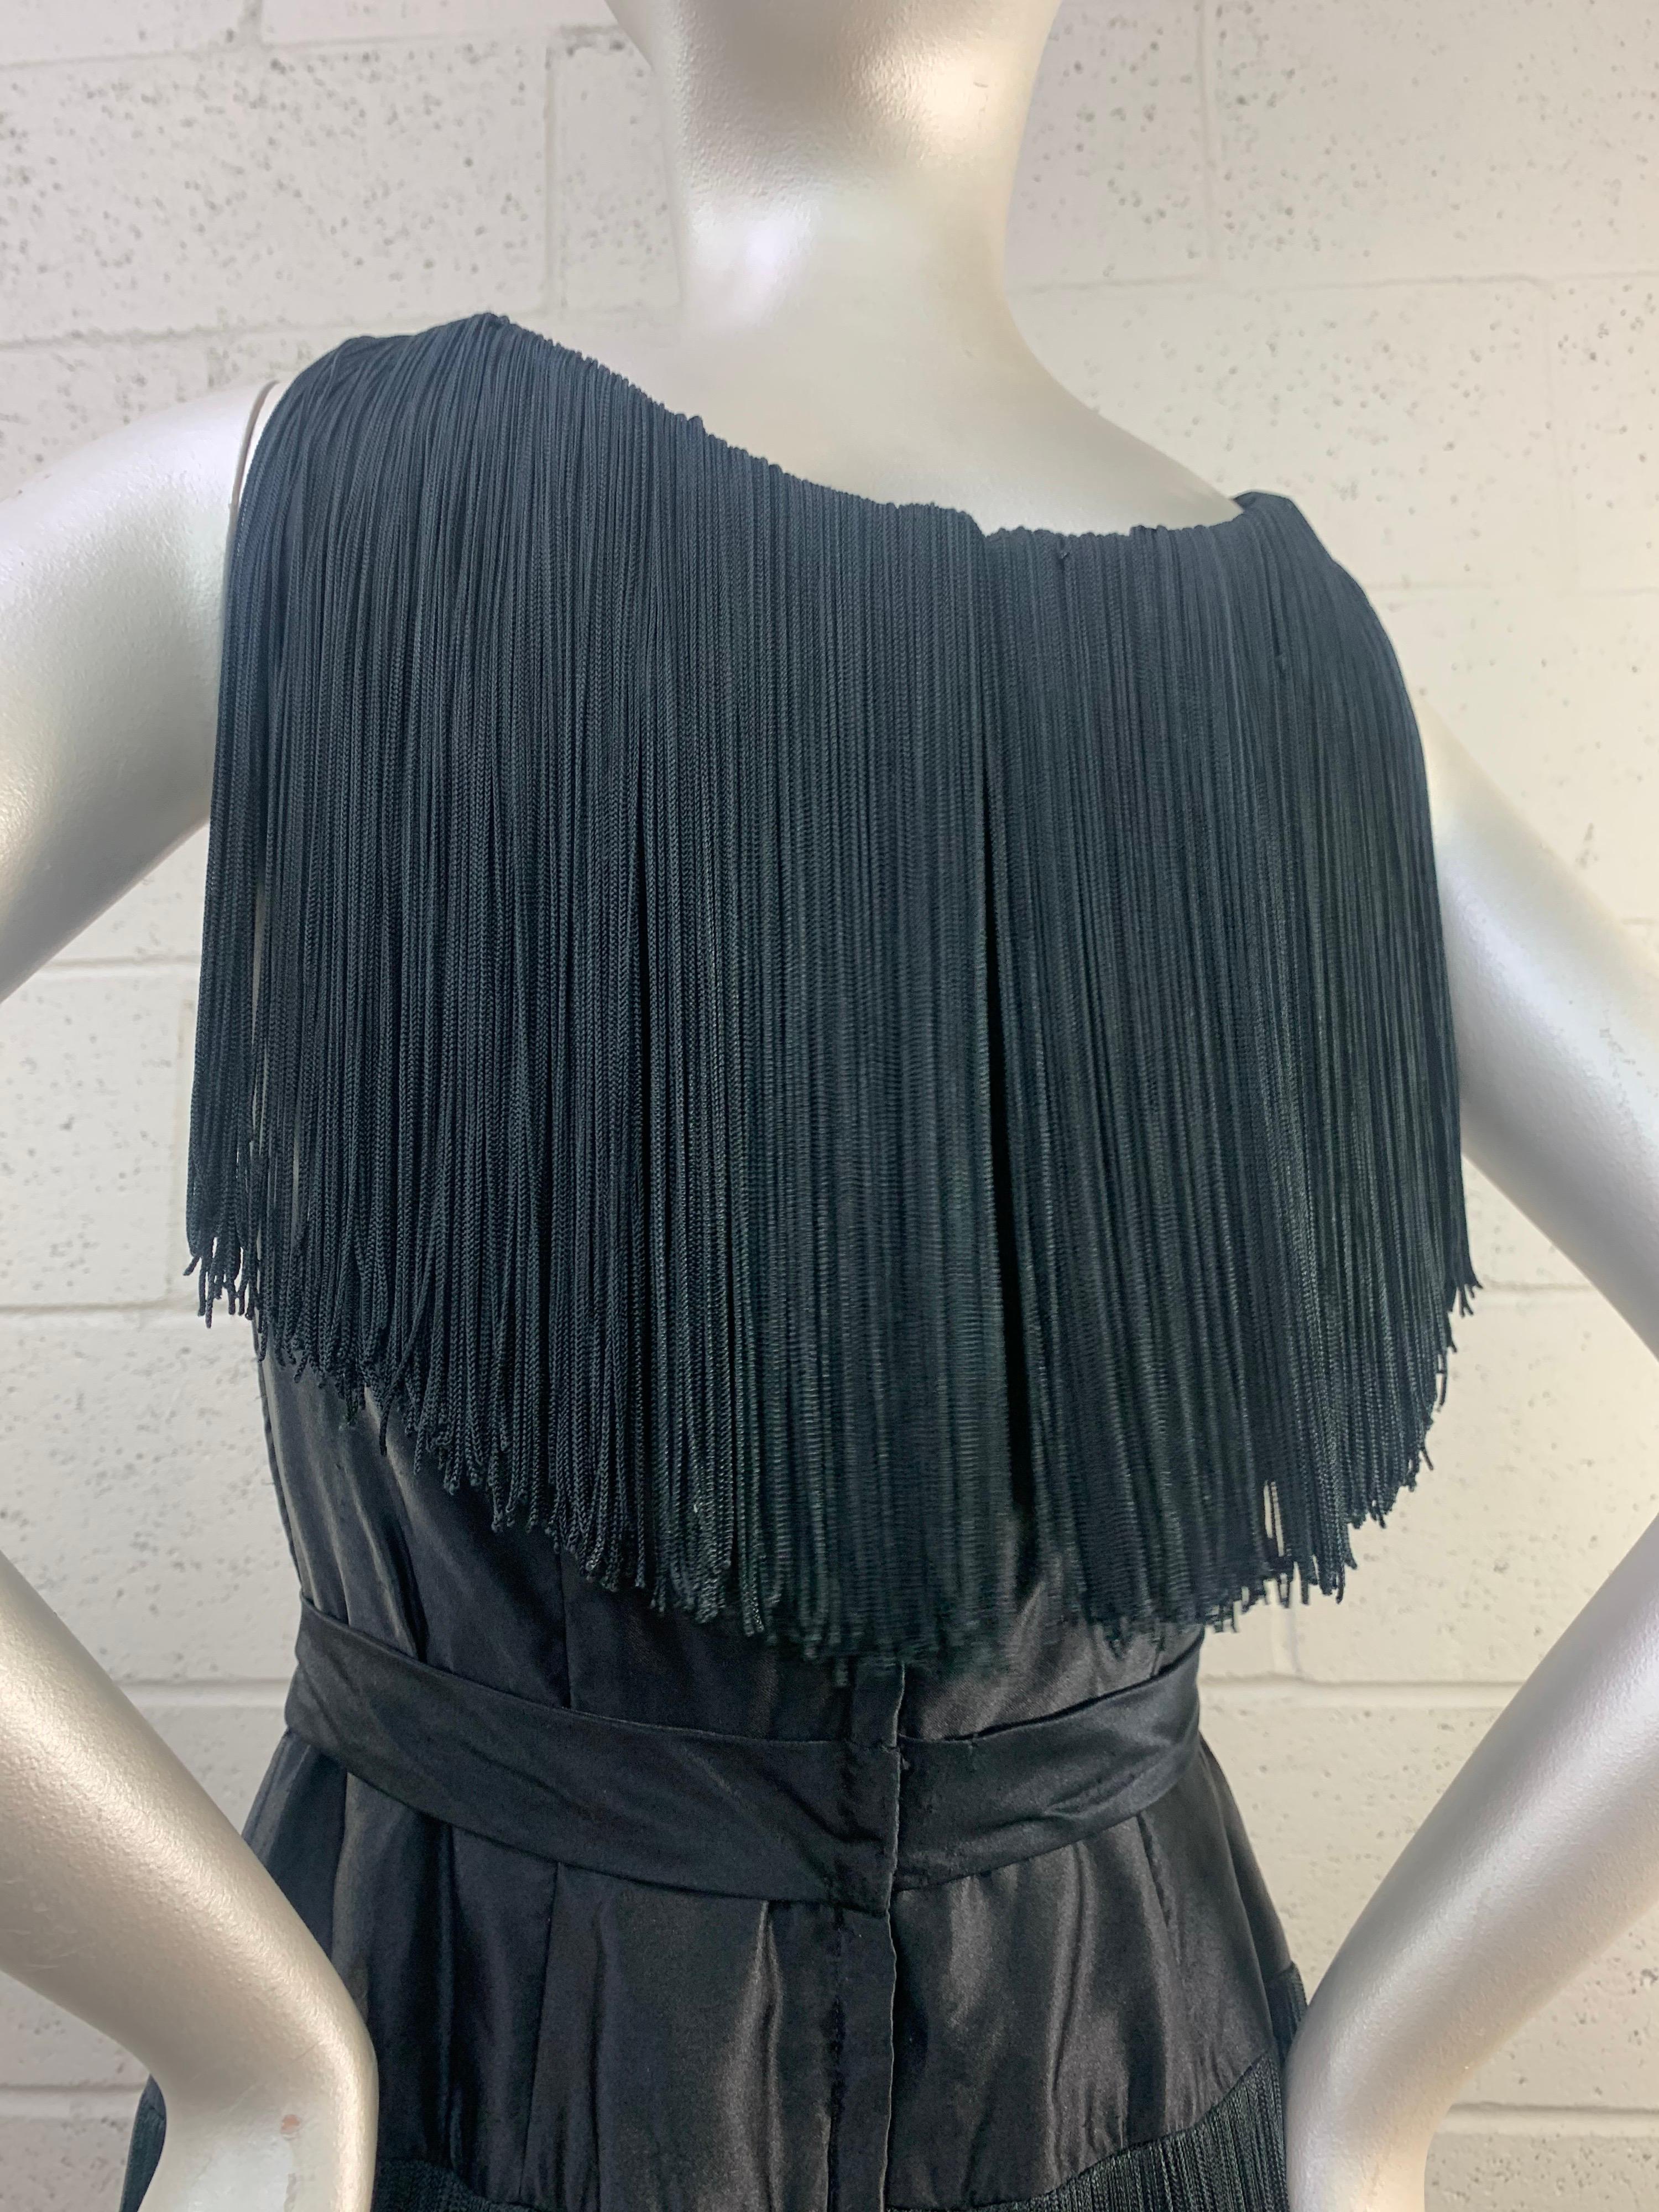 1961 Saks Fifth Avenue Black Silk Satin Sheath Dress w/ Heavy Long Fringe  For Sale 4